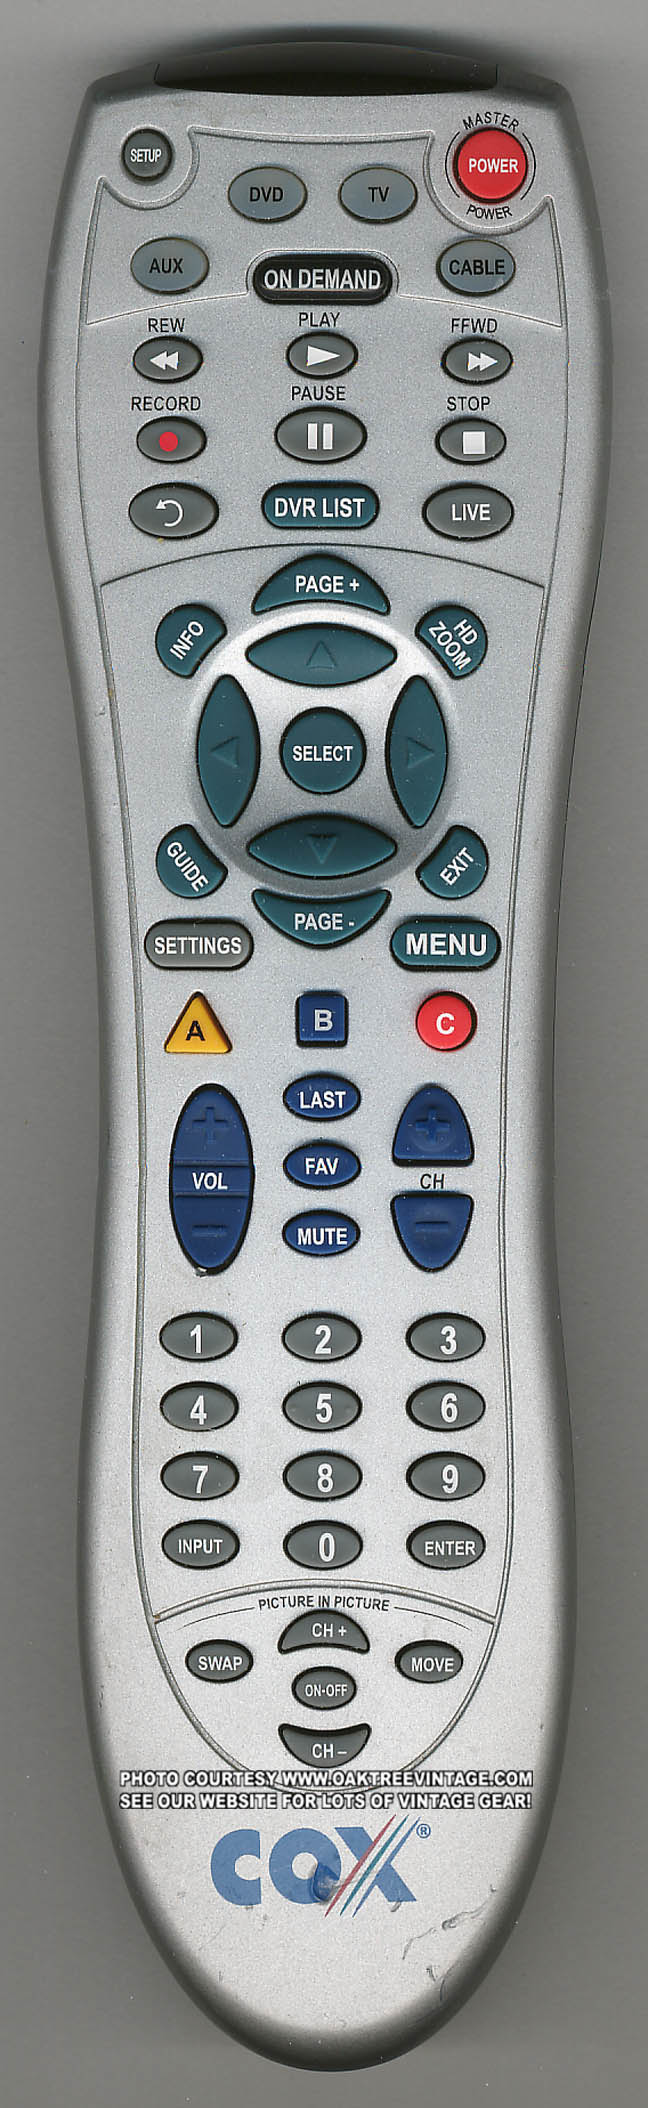 polaroid tv remote codes for comcast